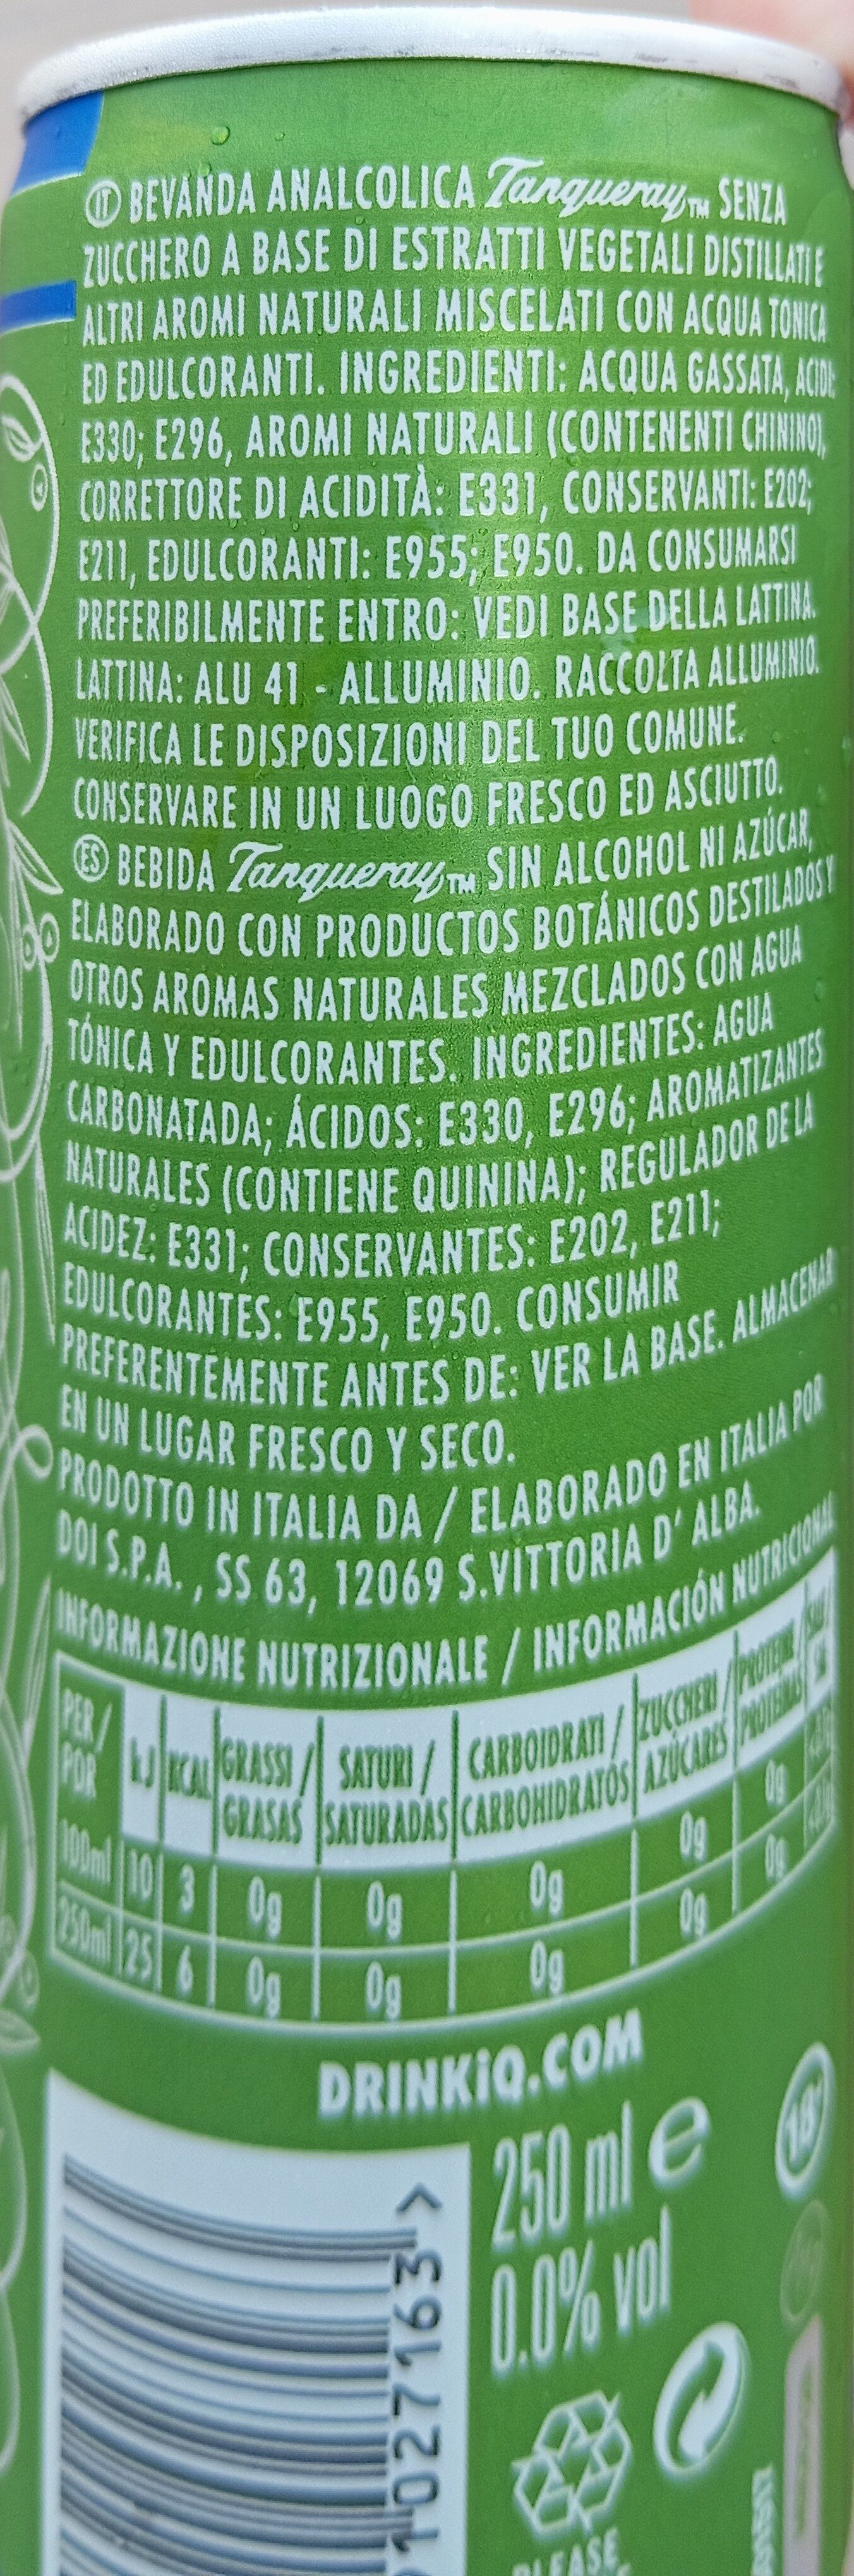 Tanqueray 0.0% - Ingredients - en